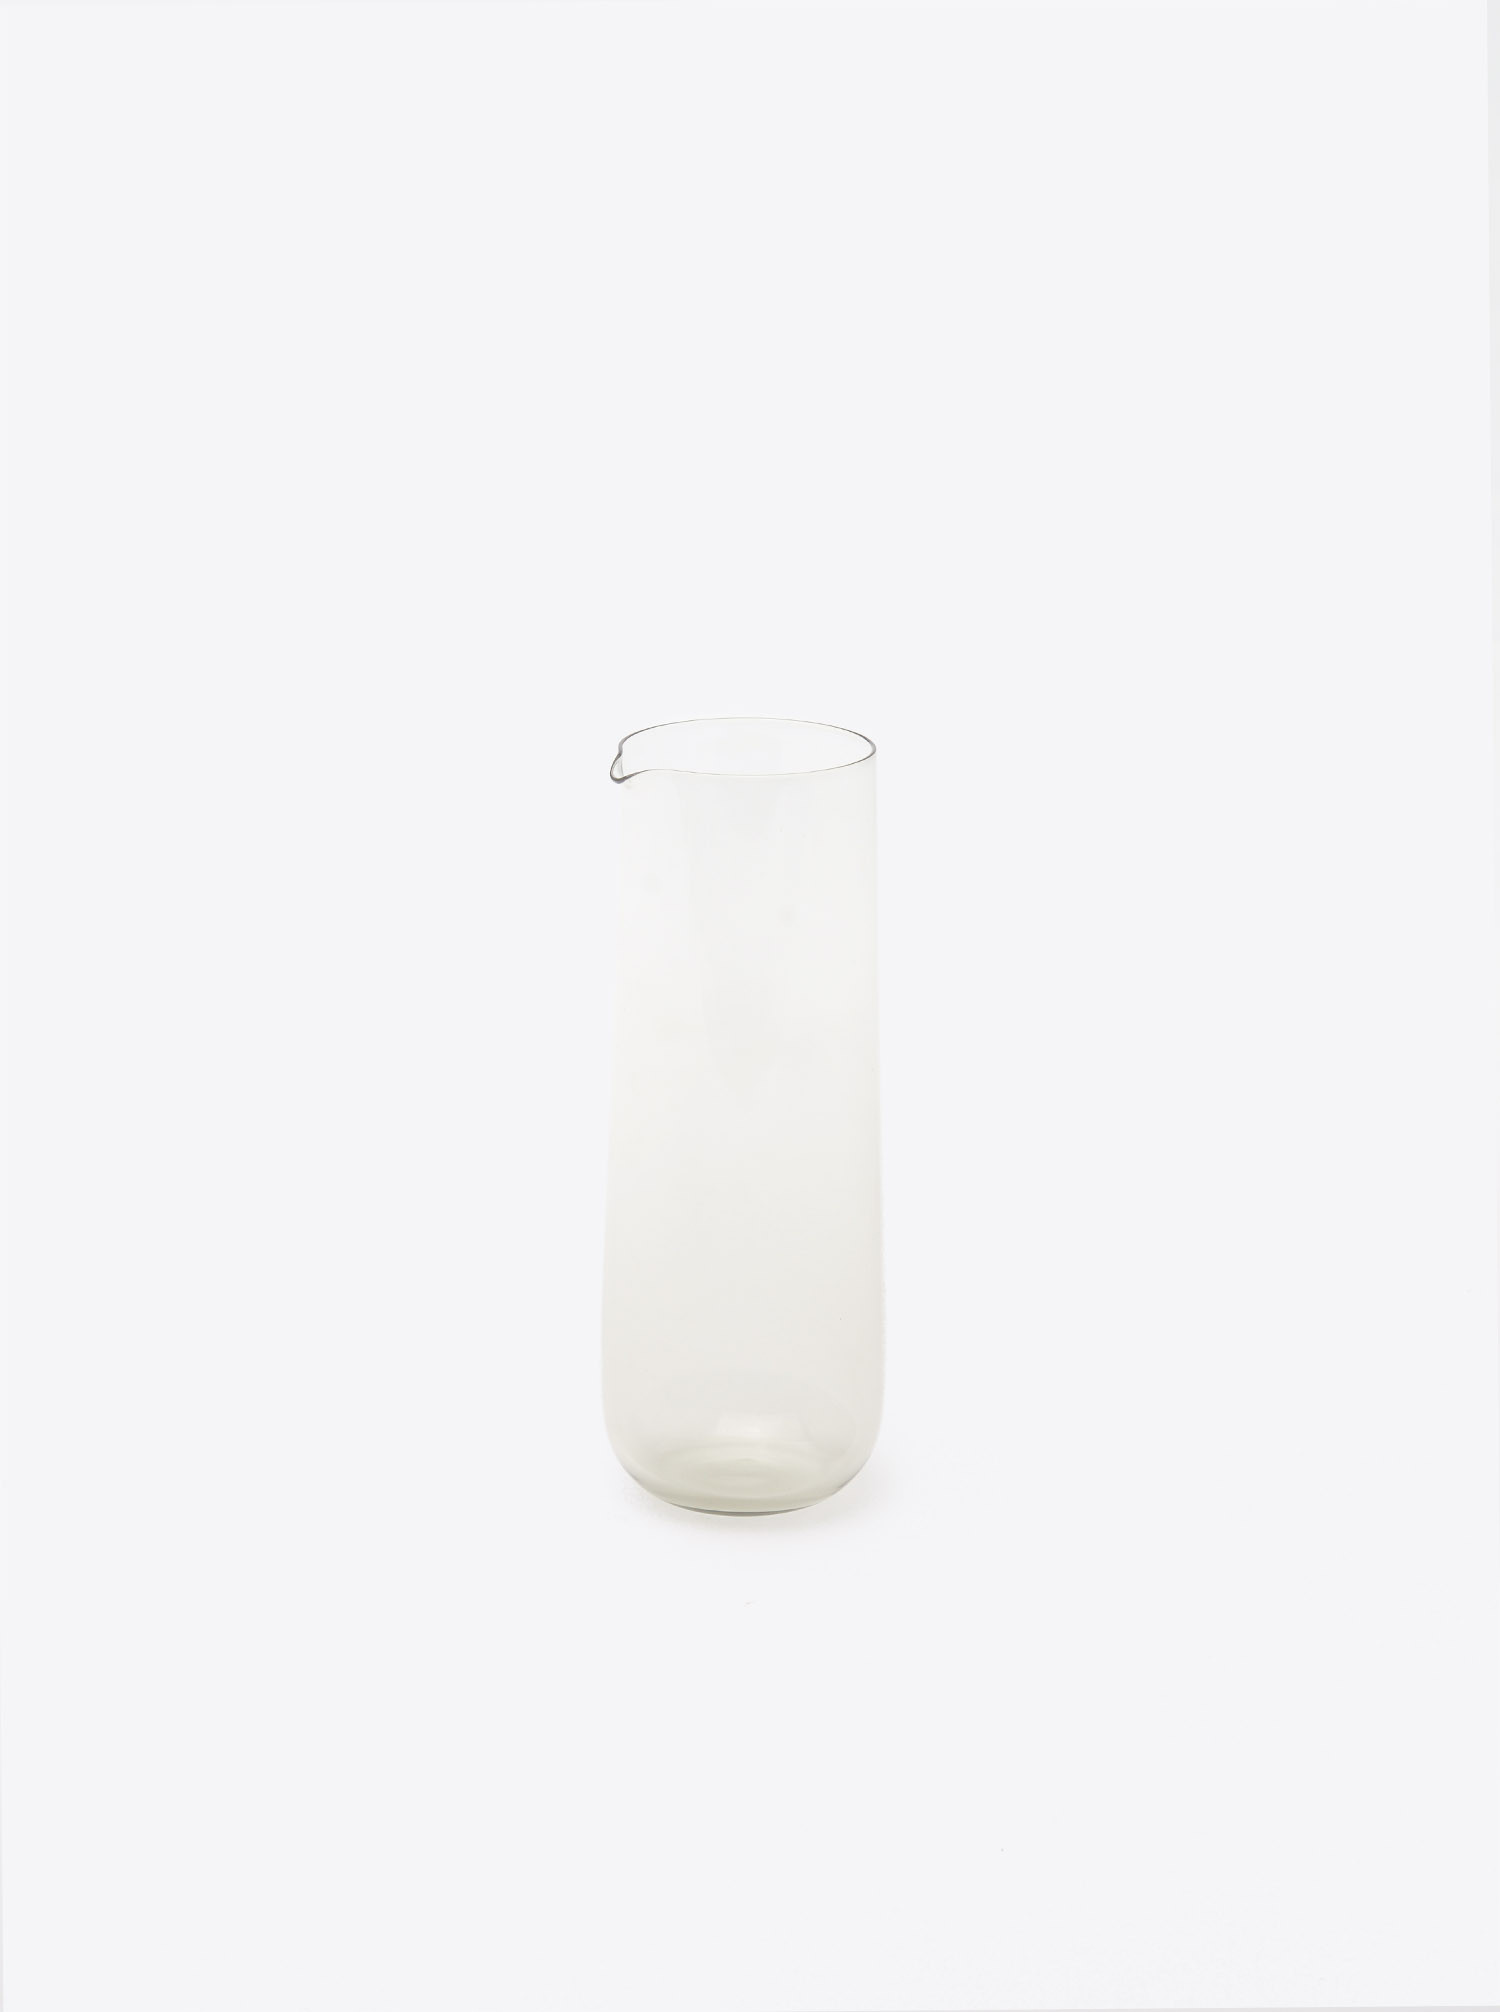 smoke grey glass vase of carafe glass 50cl designed by vincent van duysen very modernist inside carafe crystal glass smoke 50cl